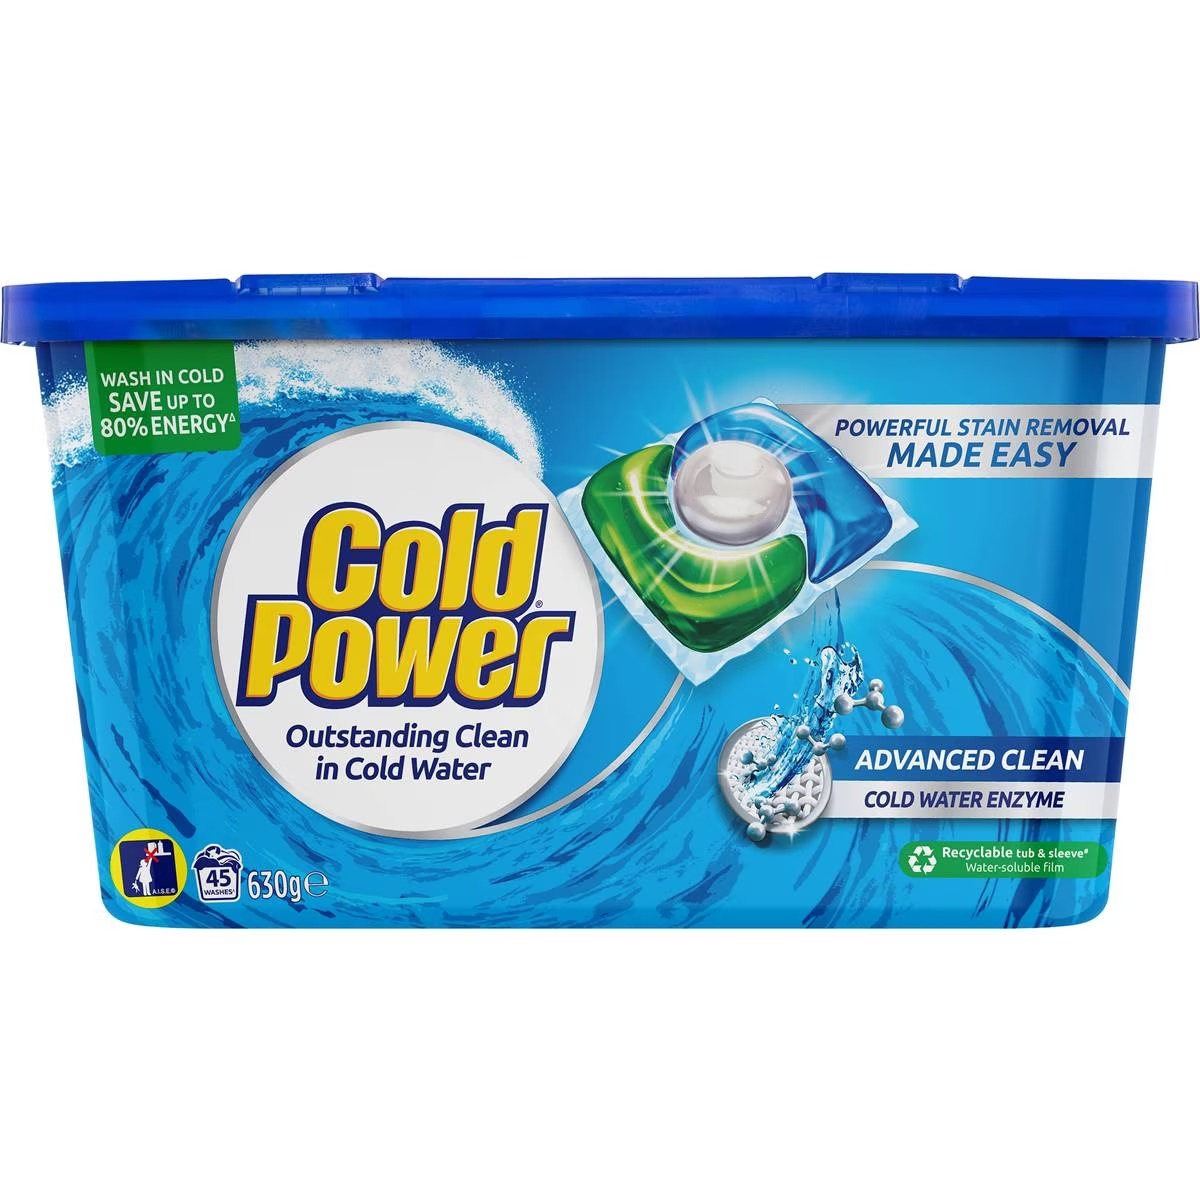 Cold Power Regular Laundry Detergent Capsules (45pk) 630g